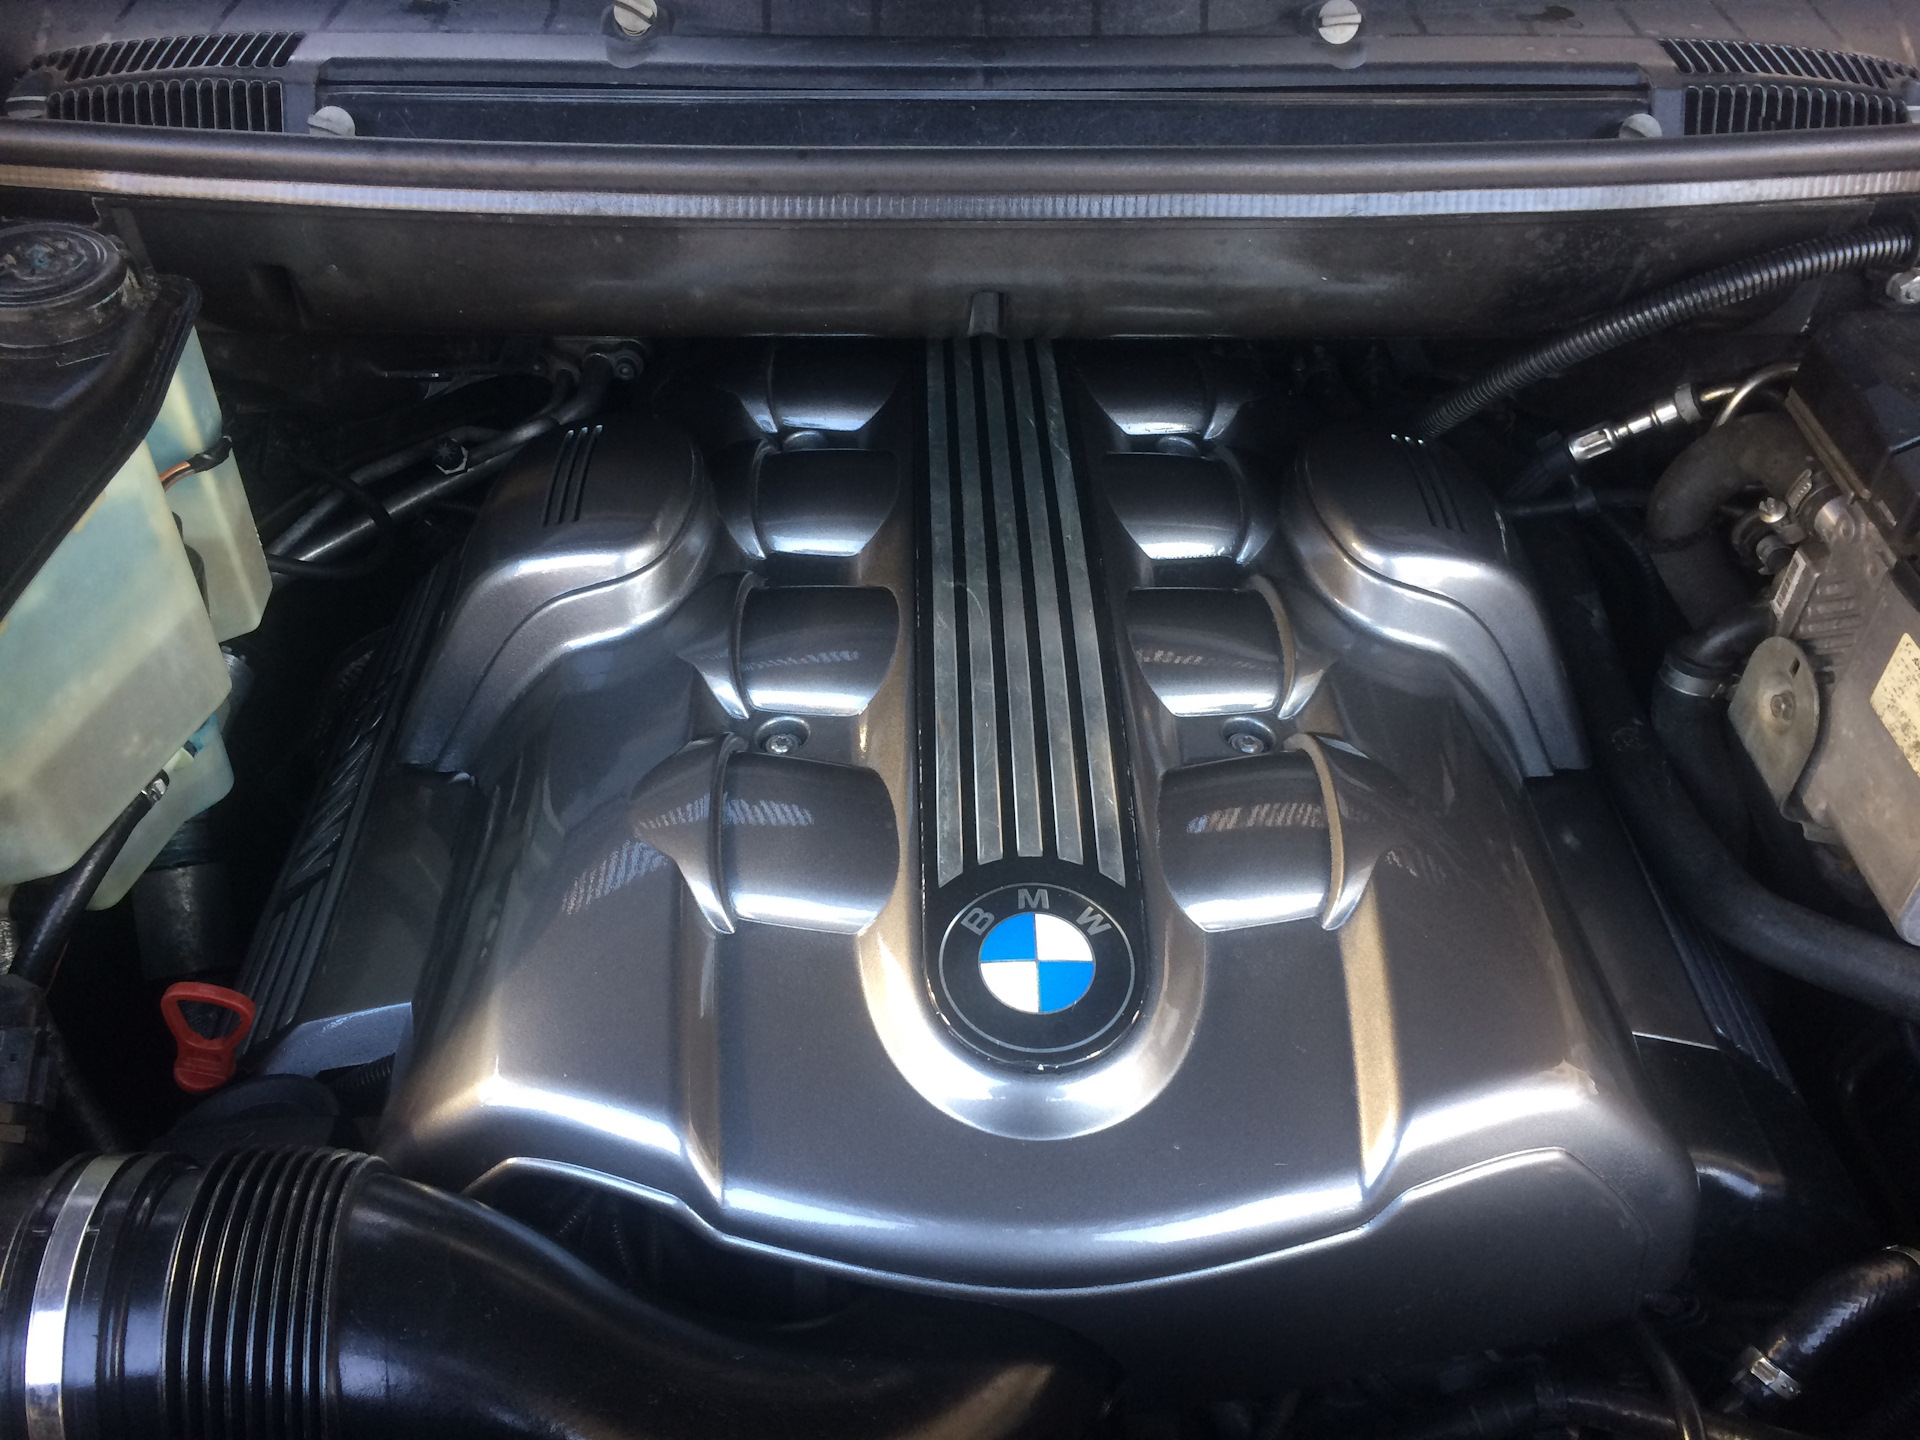 Мотор х5 е70. BMW x5 e53 4.4 двигатель. Крышка двигателя BMW n53. Двигатель 4.4 БМВ х5 е53. BMW x5 f15 50i крышка мотора.